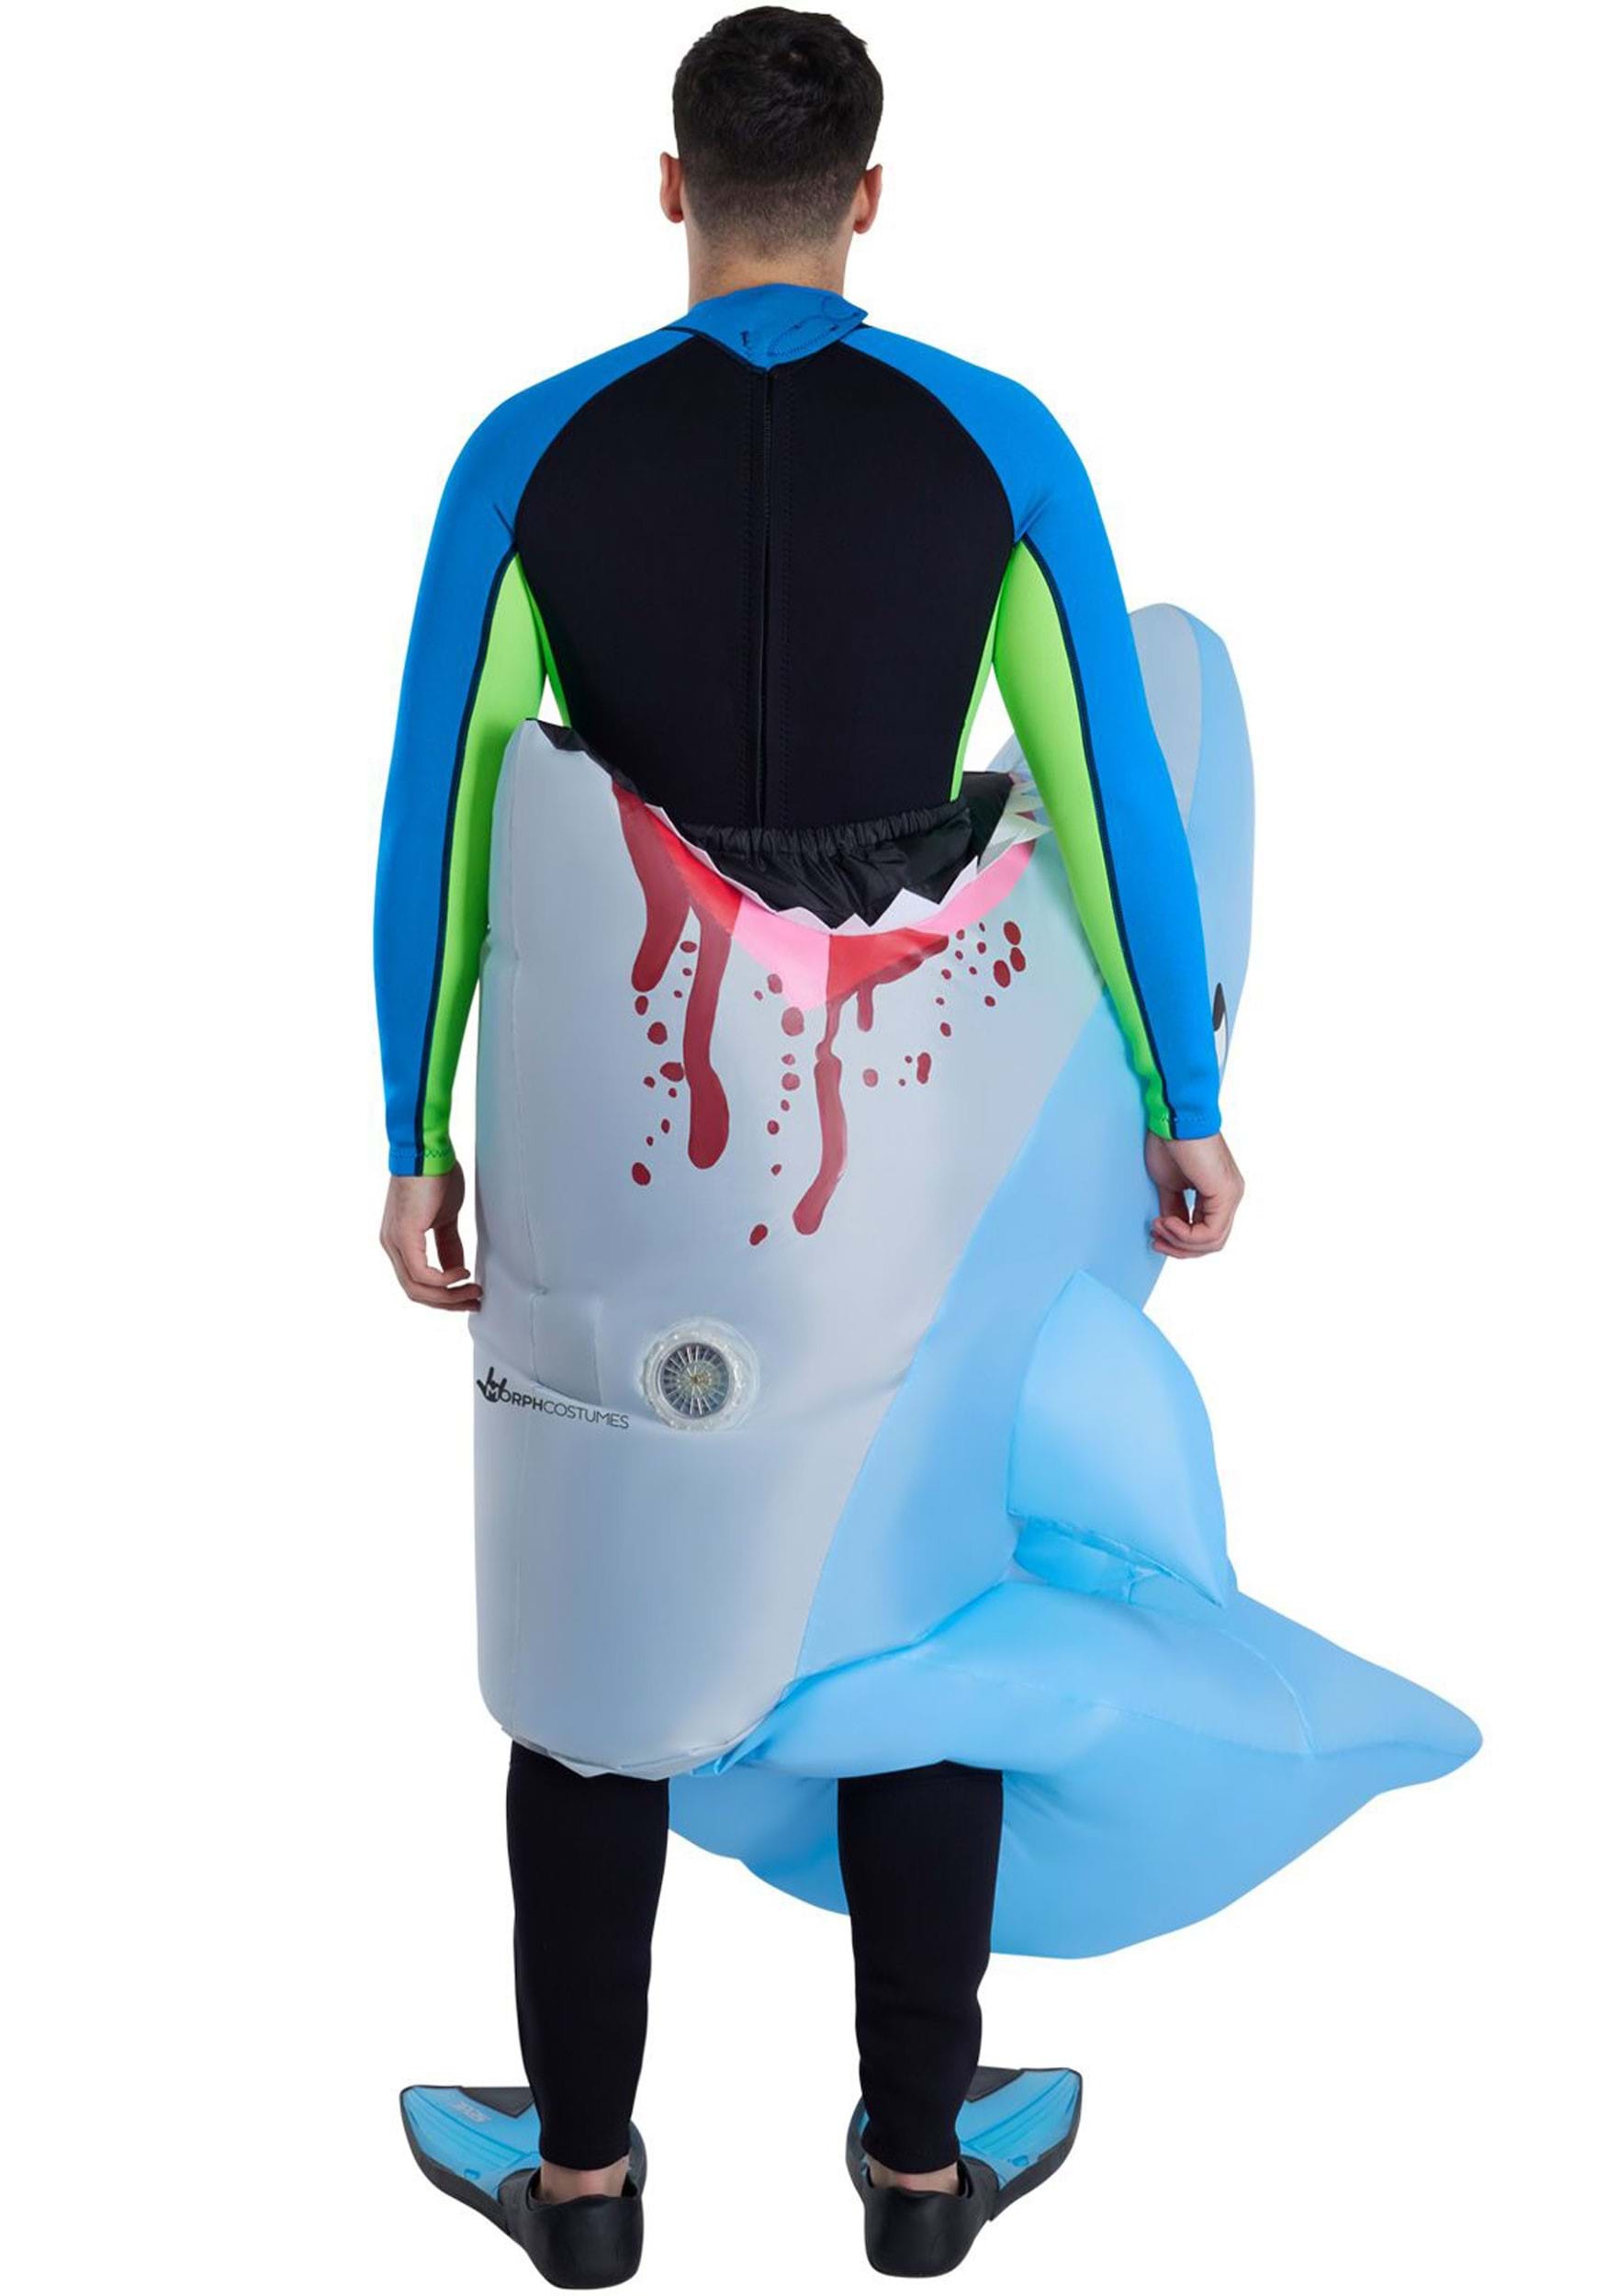 Adult Man Eating Inflatable Shark